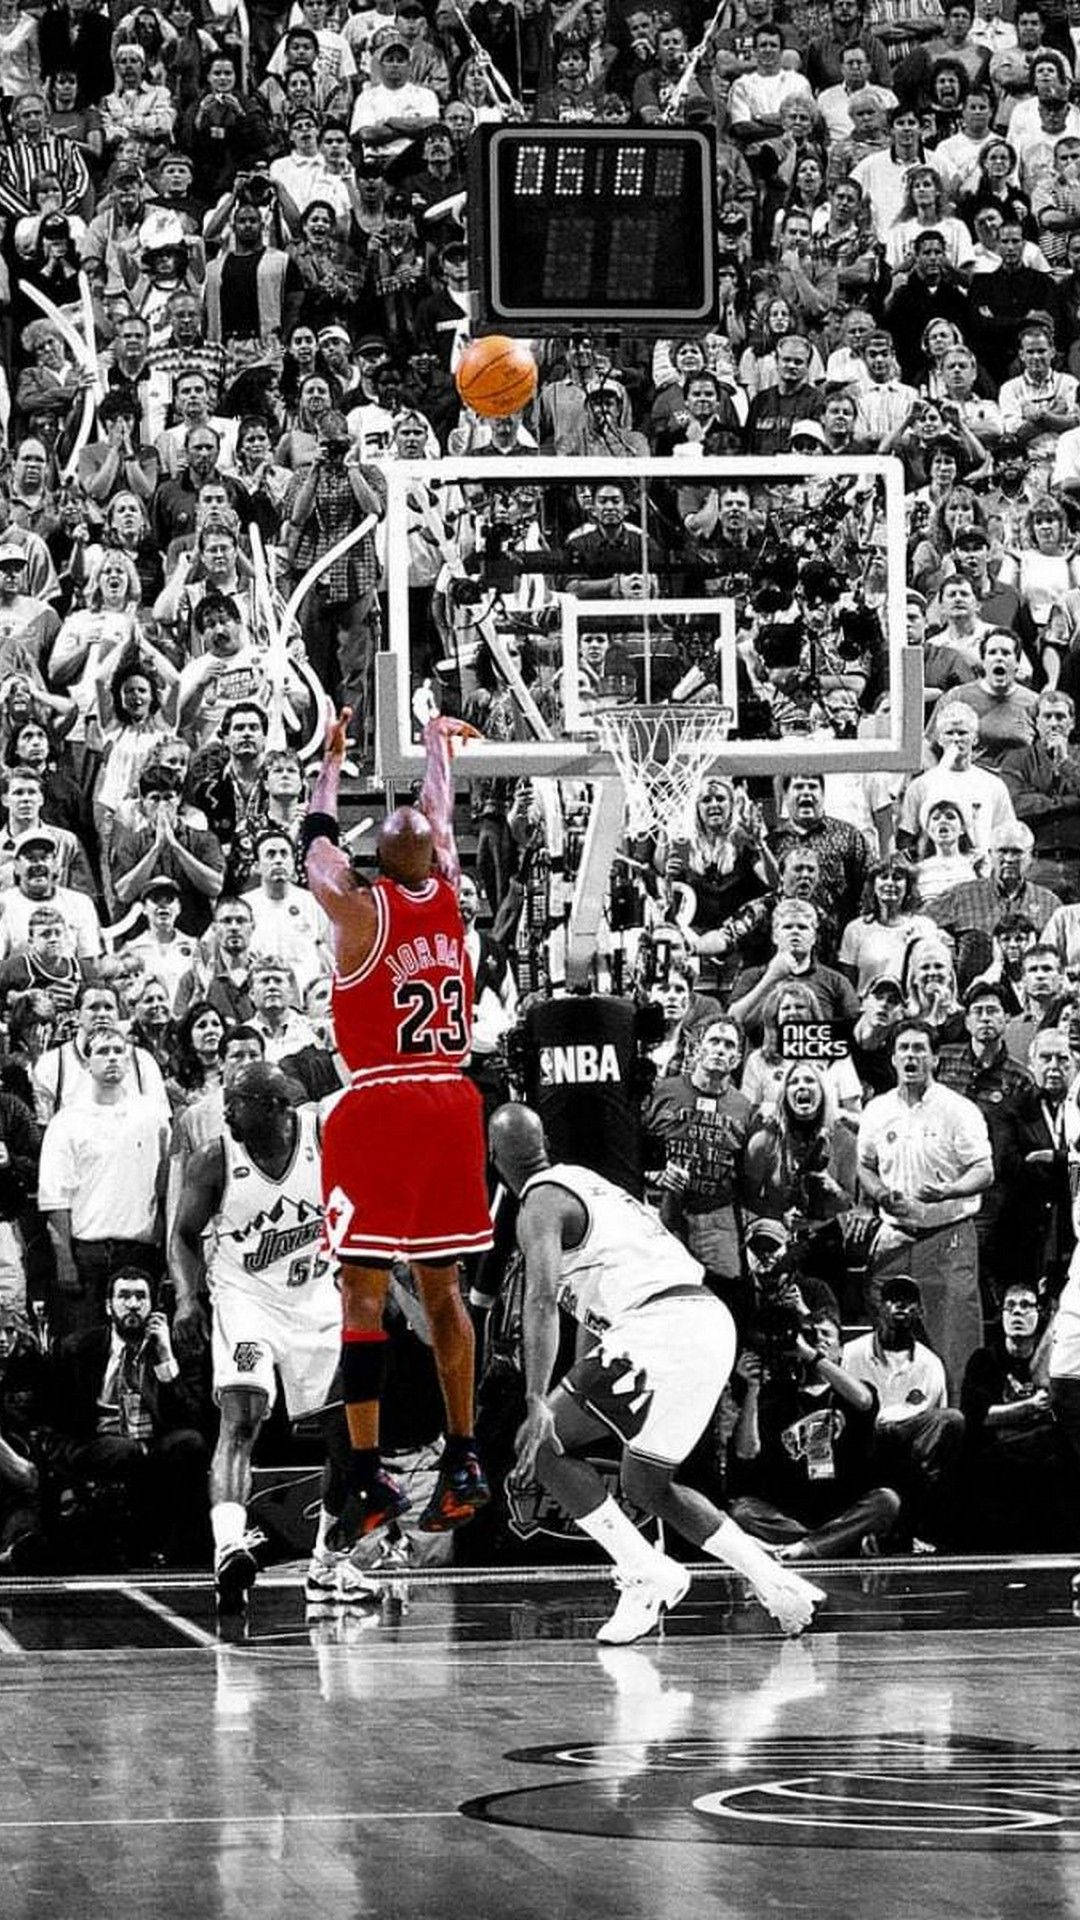 HD wallpaper: Vince Carter, NBA, basketball, dunks, hoop, sport, crowd,  group of people